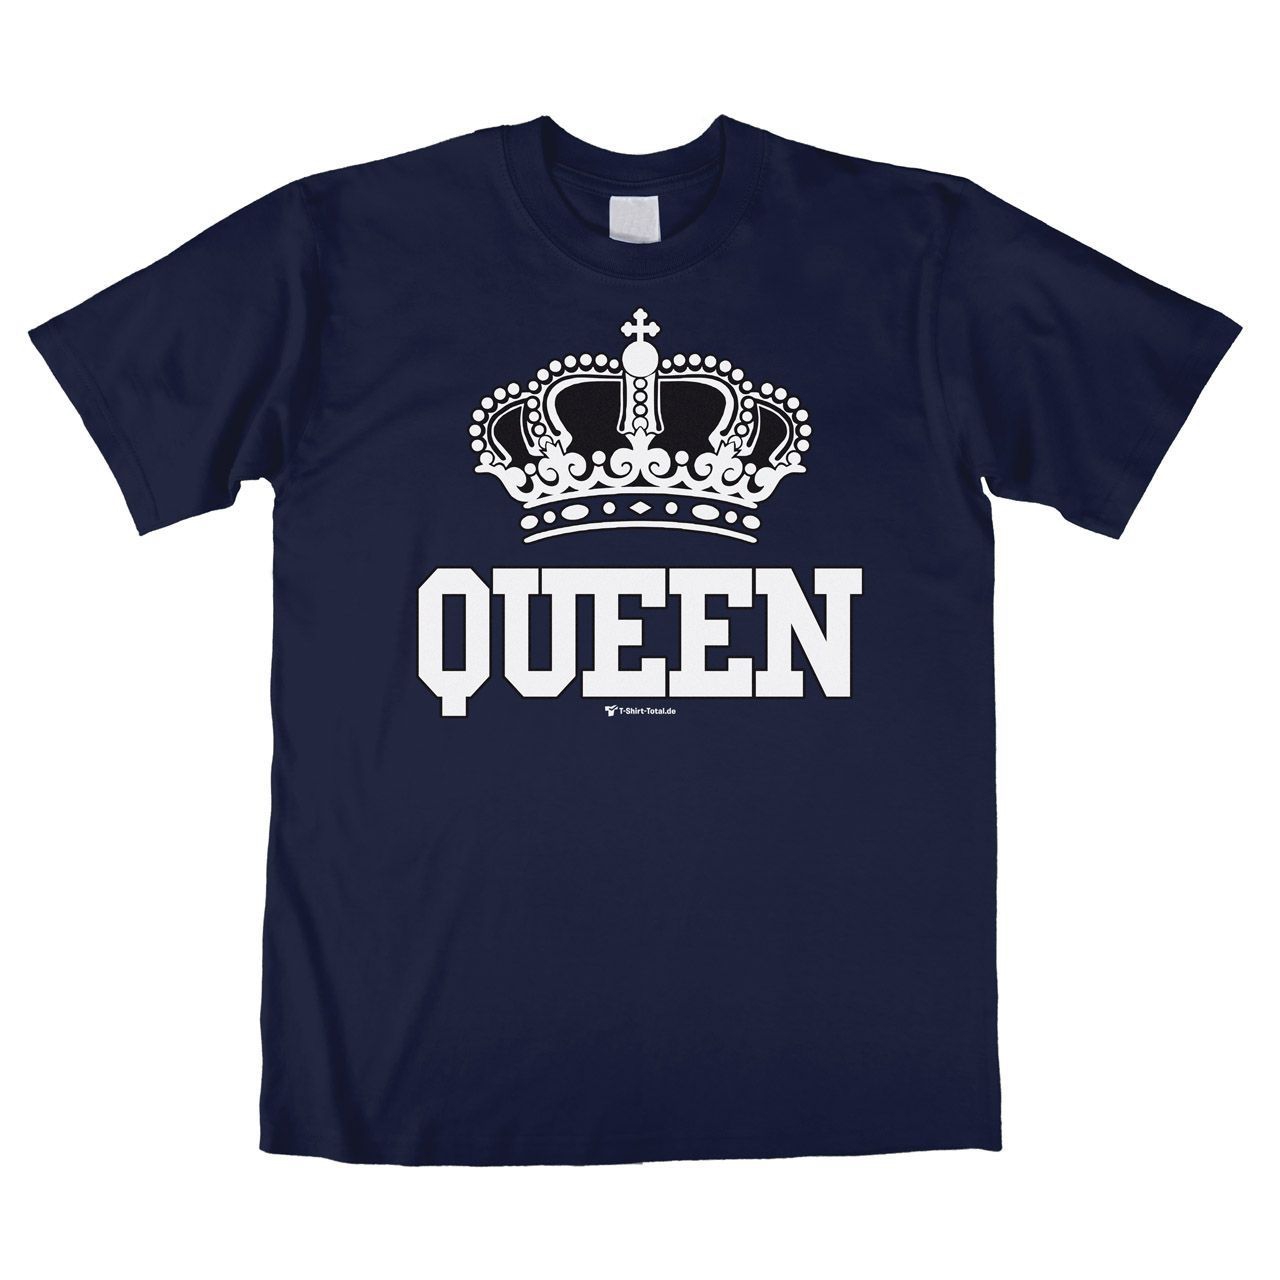 Queen Unisex T-Shirt navy Medium